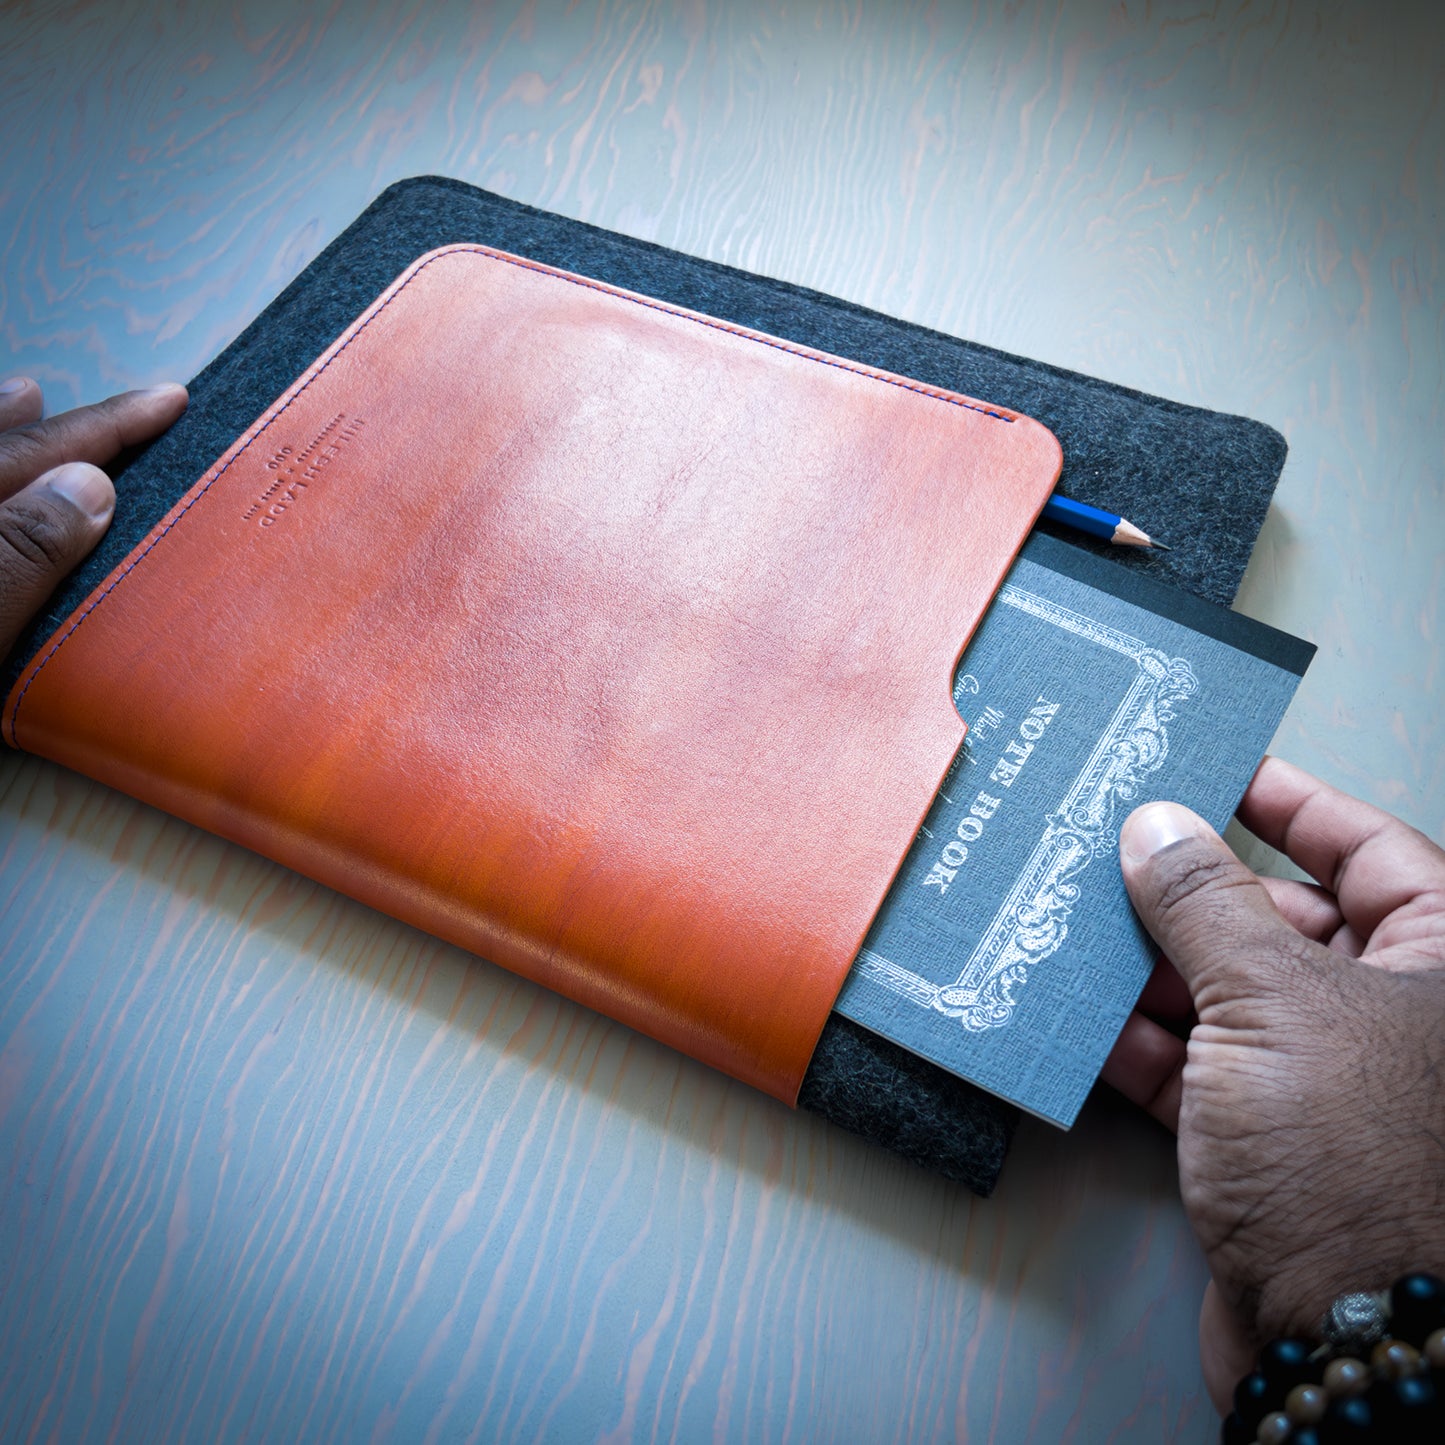 iPad Pro Sleeve in Cognac Leather and Wool Felt Handmade in Canada